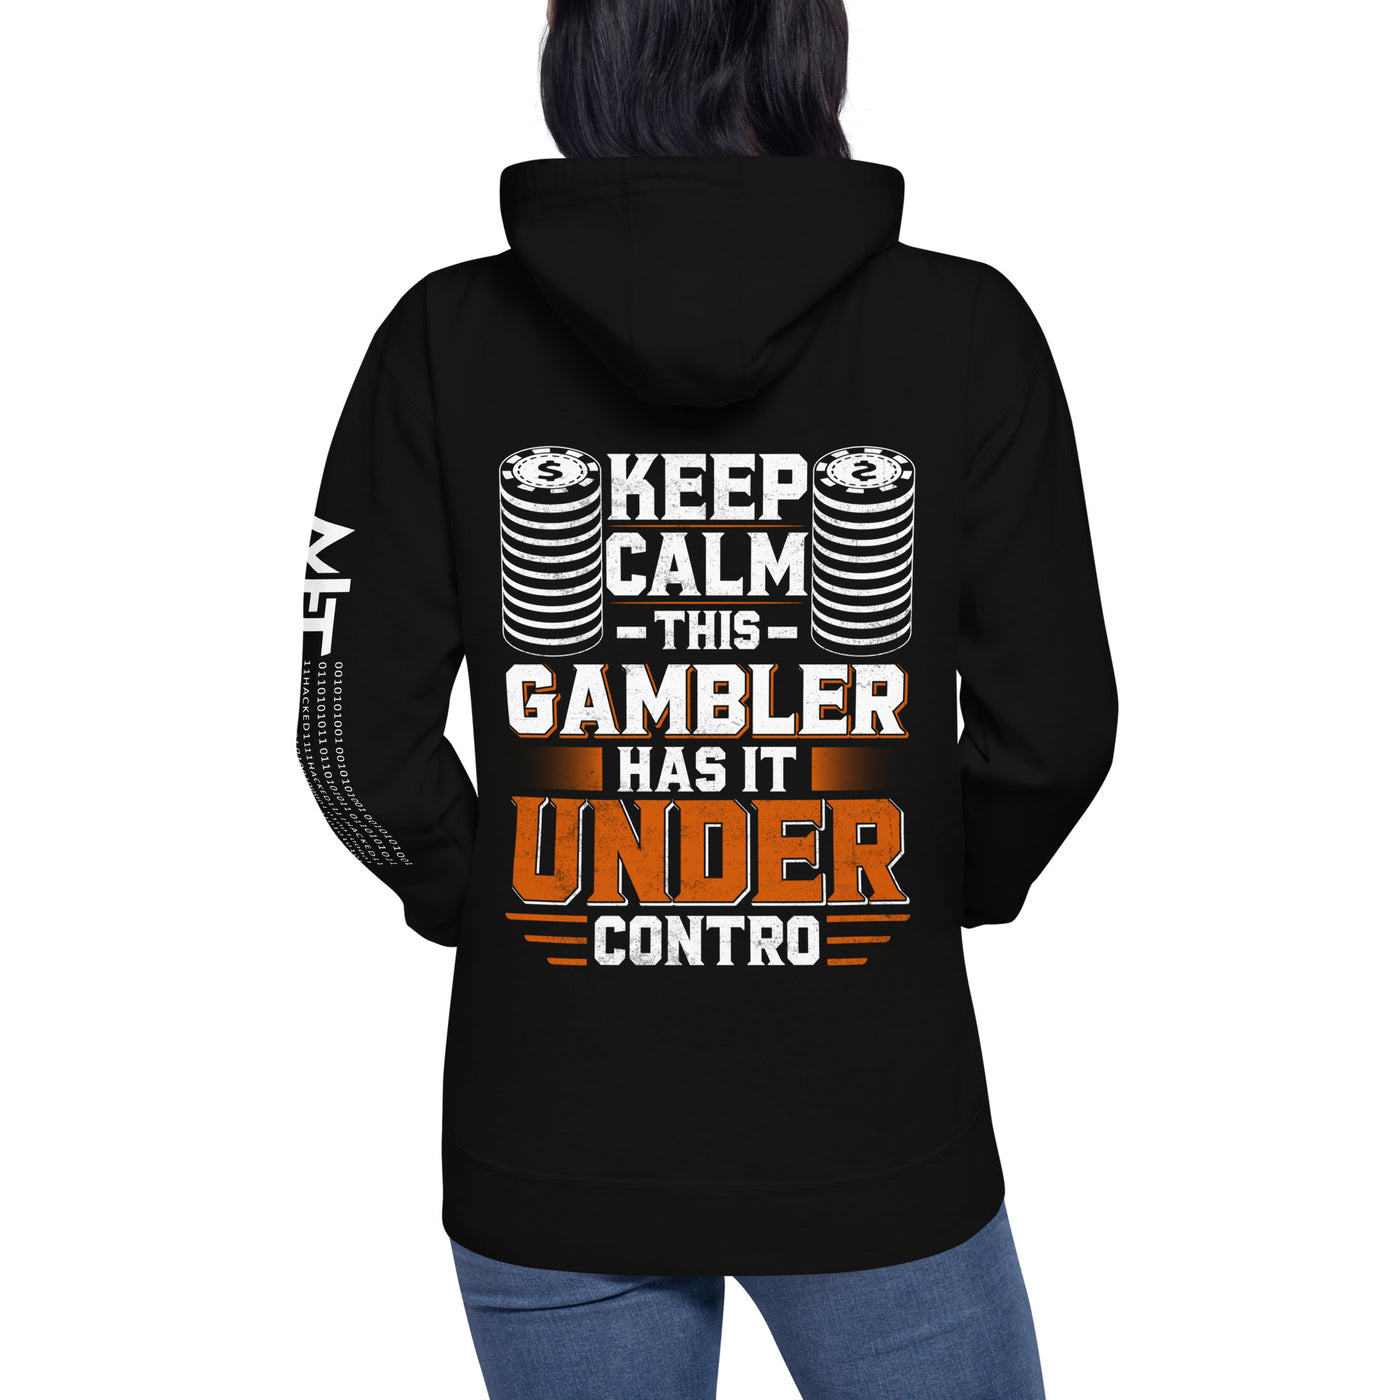 Keep Calm: This Gambler Has it under Control - Unisex Hoodie ( Back Print )